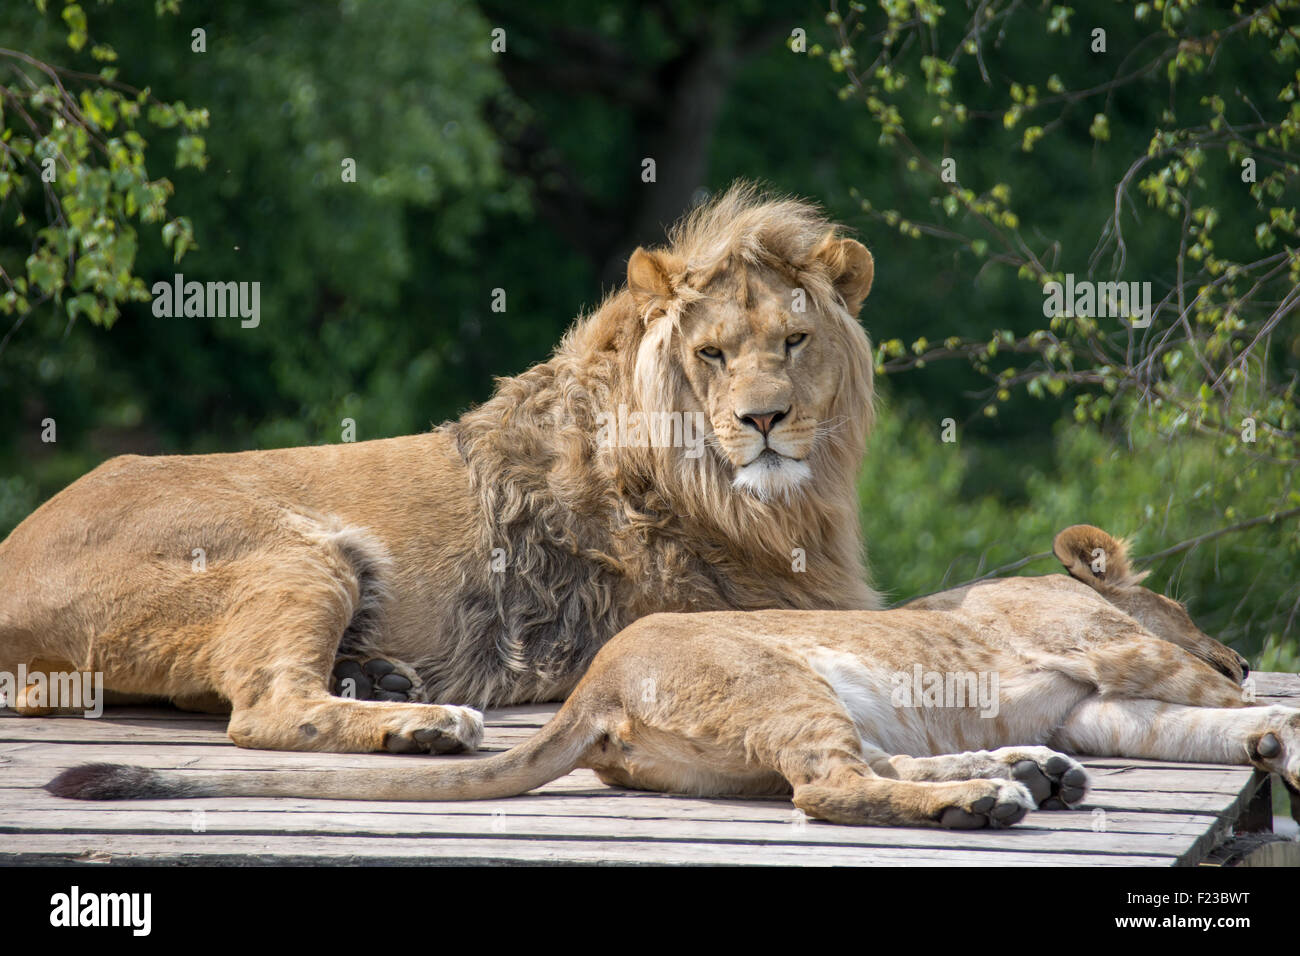 Big lion laying down Stock Photo